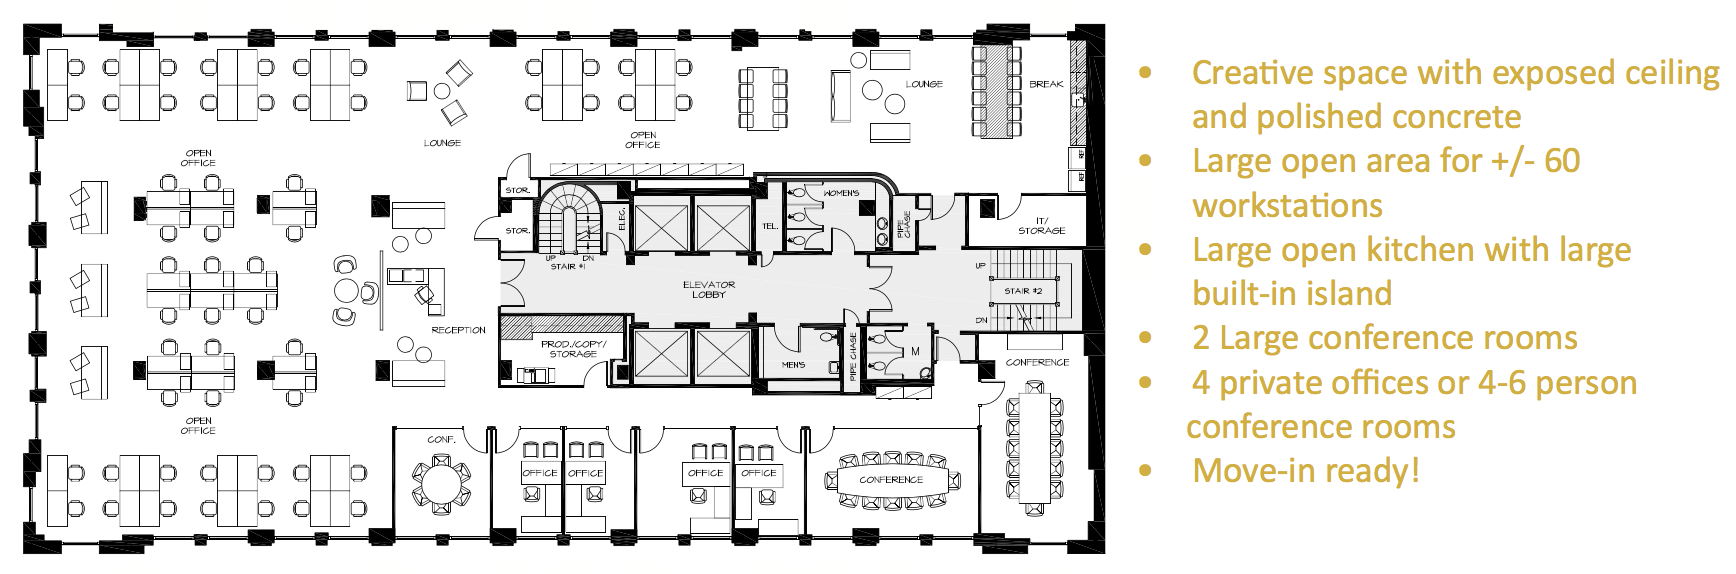 Suite 600 Floorplan